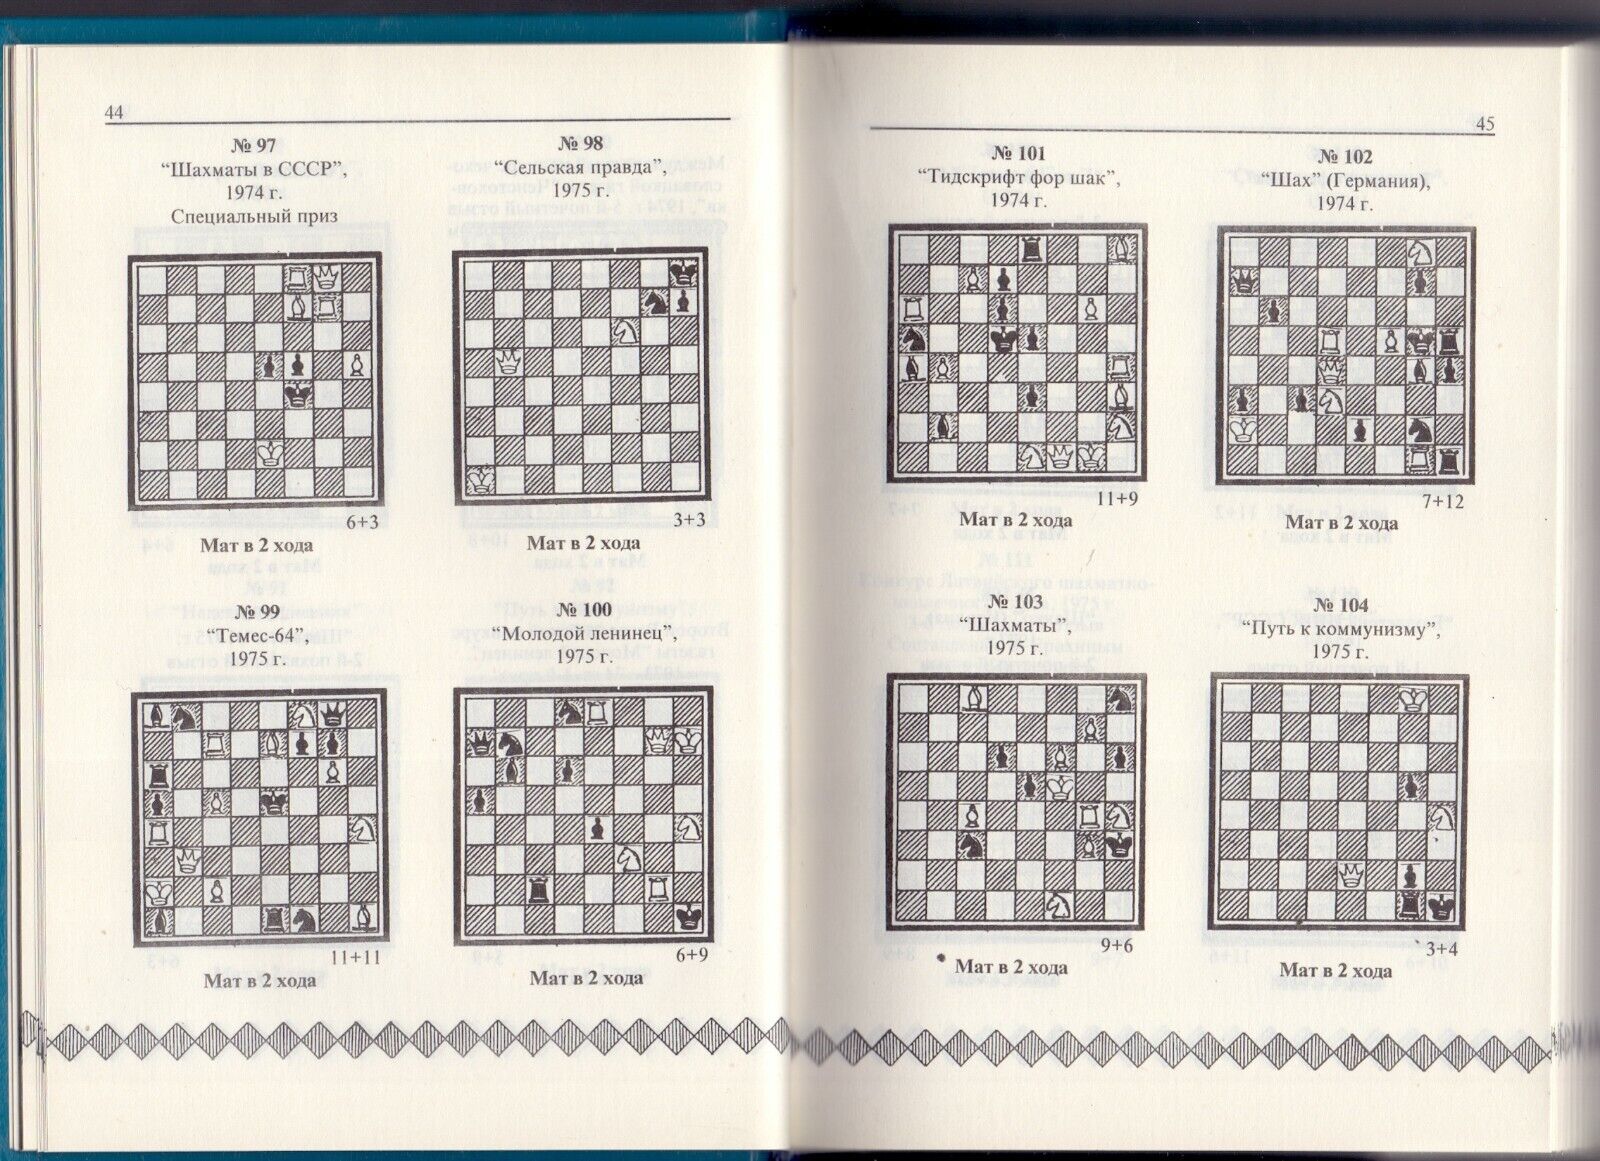 11092.Chess book: Malinovskikh A. Chess Muse of the Trans-Urals. Shadrinsk 1999